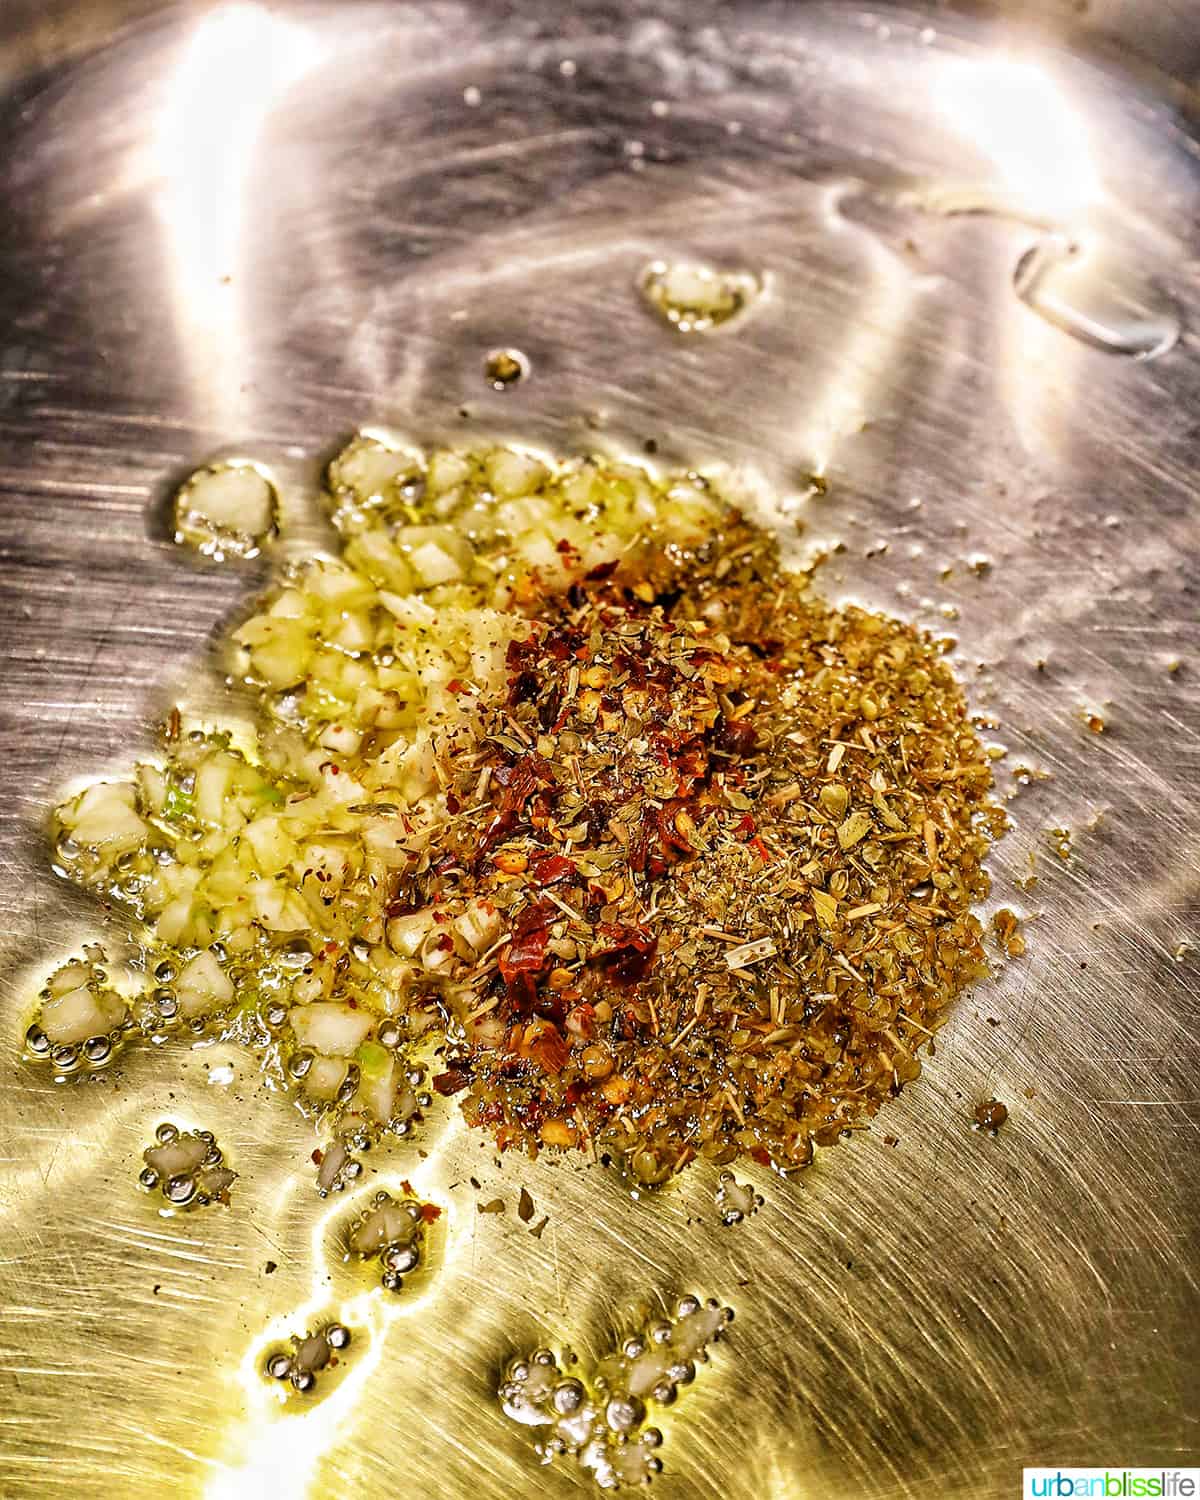 sauteing garlic and herbs